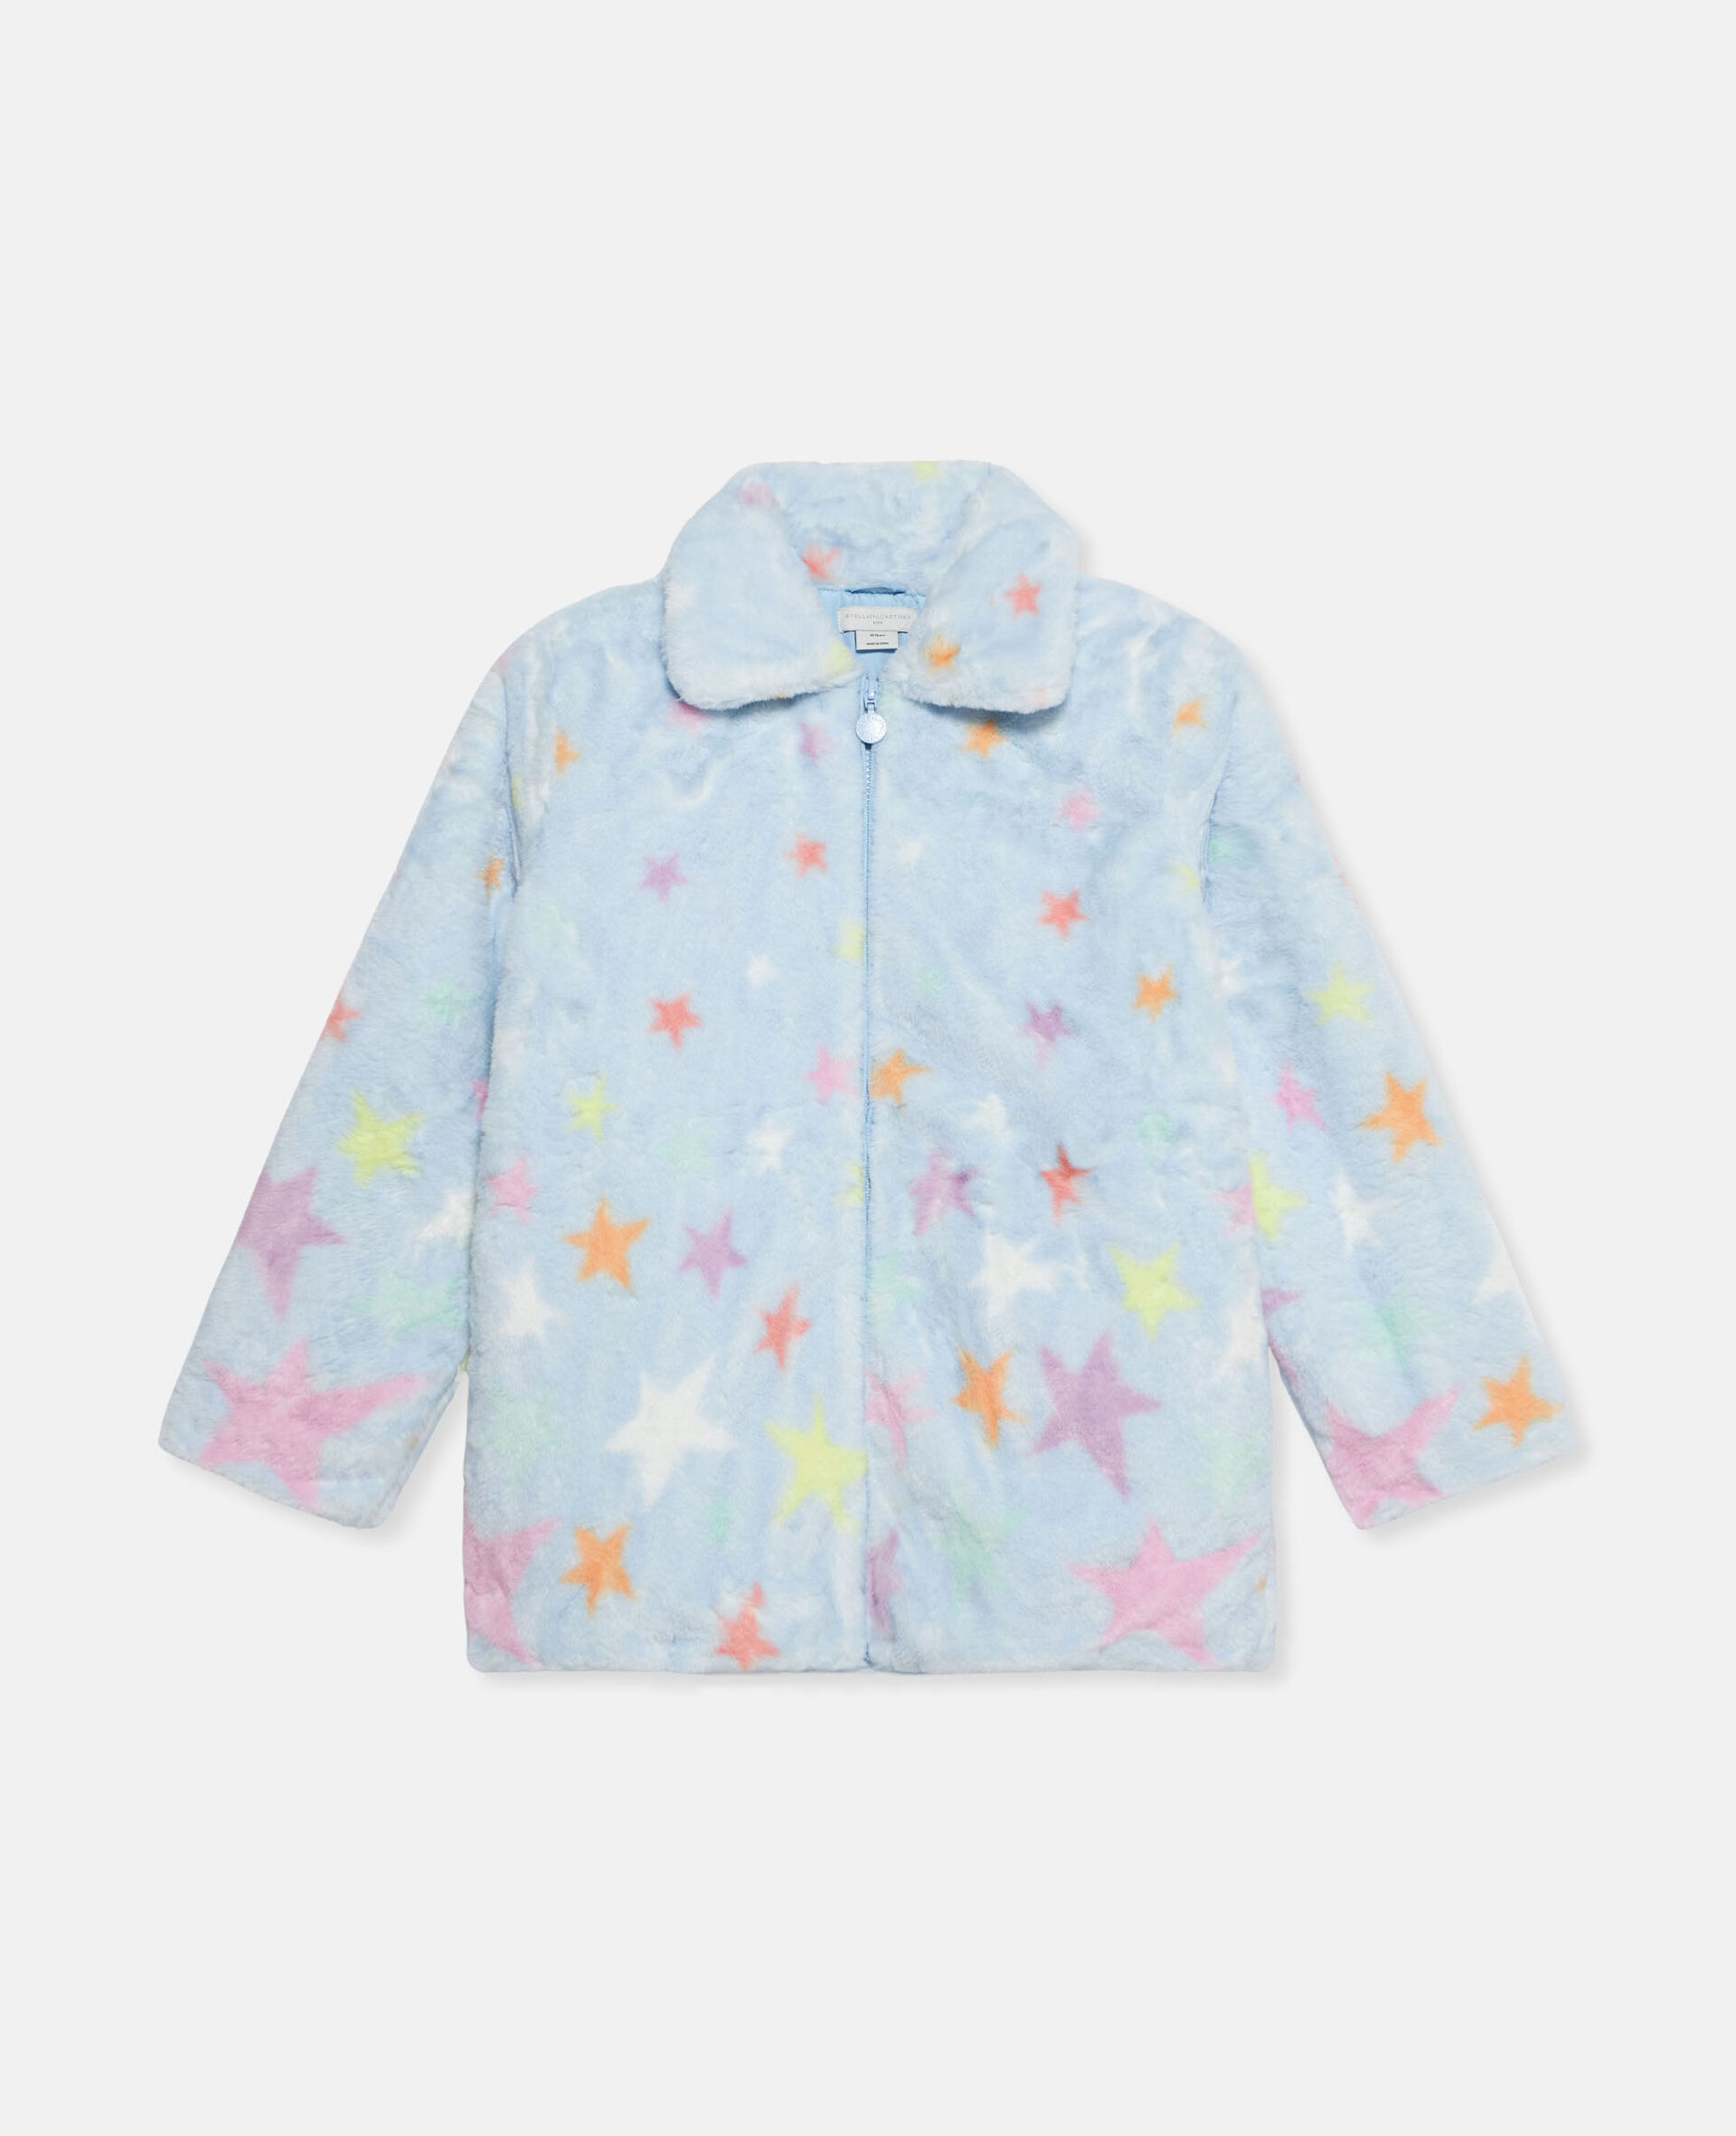 Star Print Fluffy Collared Jacket-Multicolour-medium